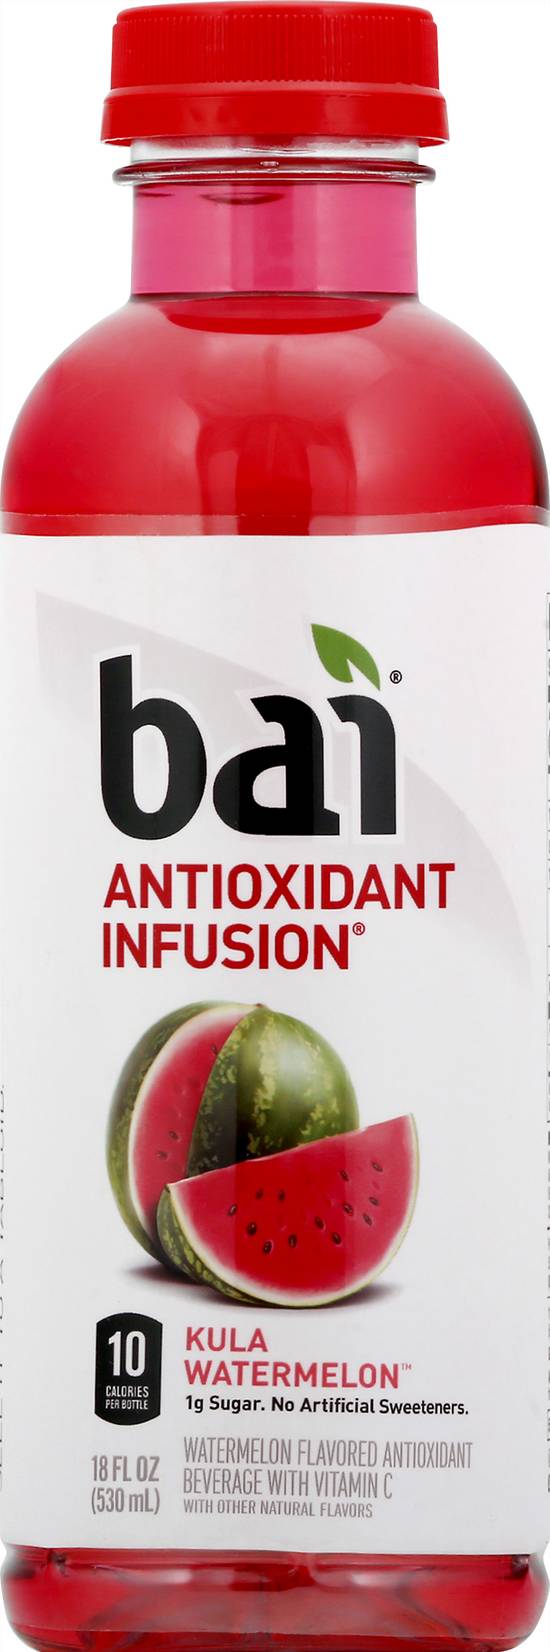 Bai Antioxidant Infusion (18 fl oz) (kula watermelon)